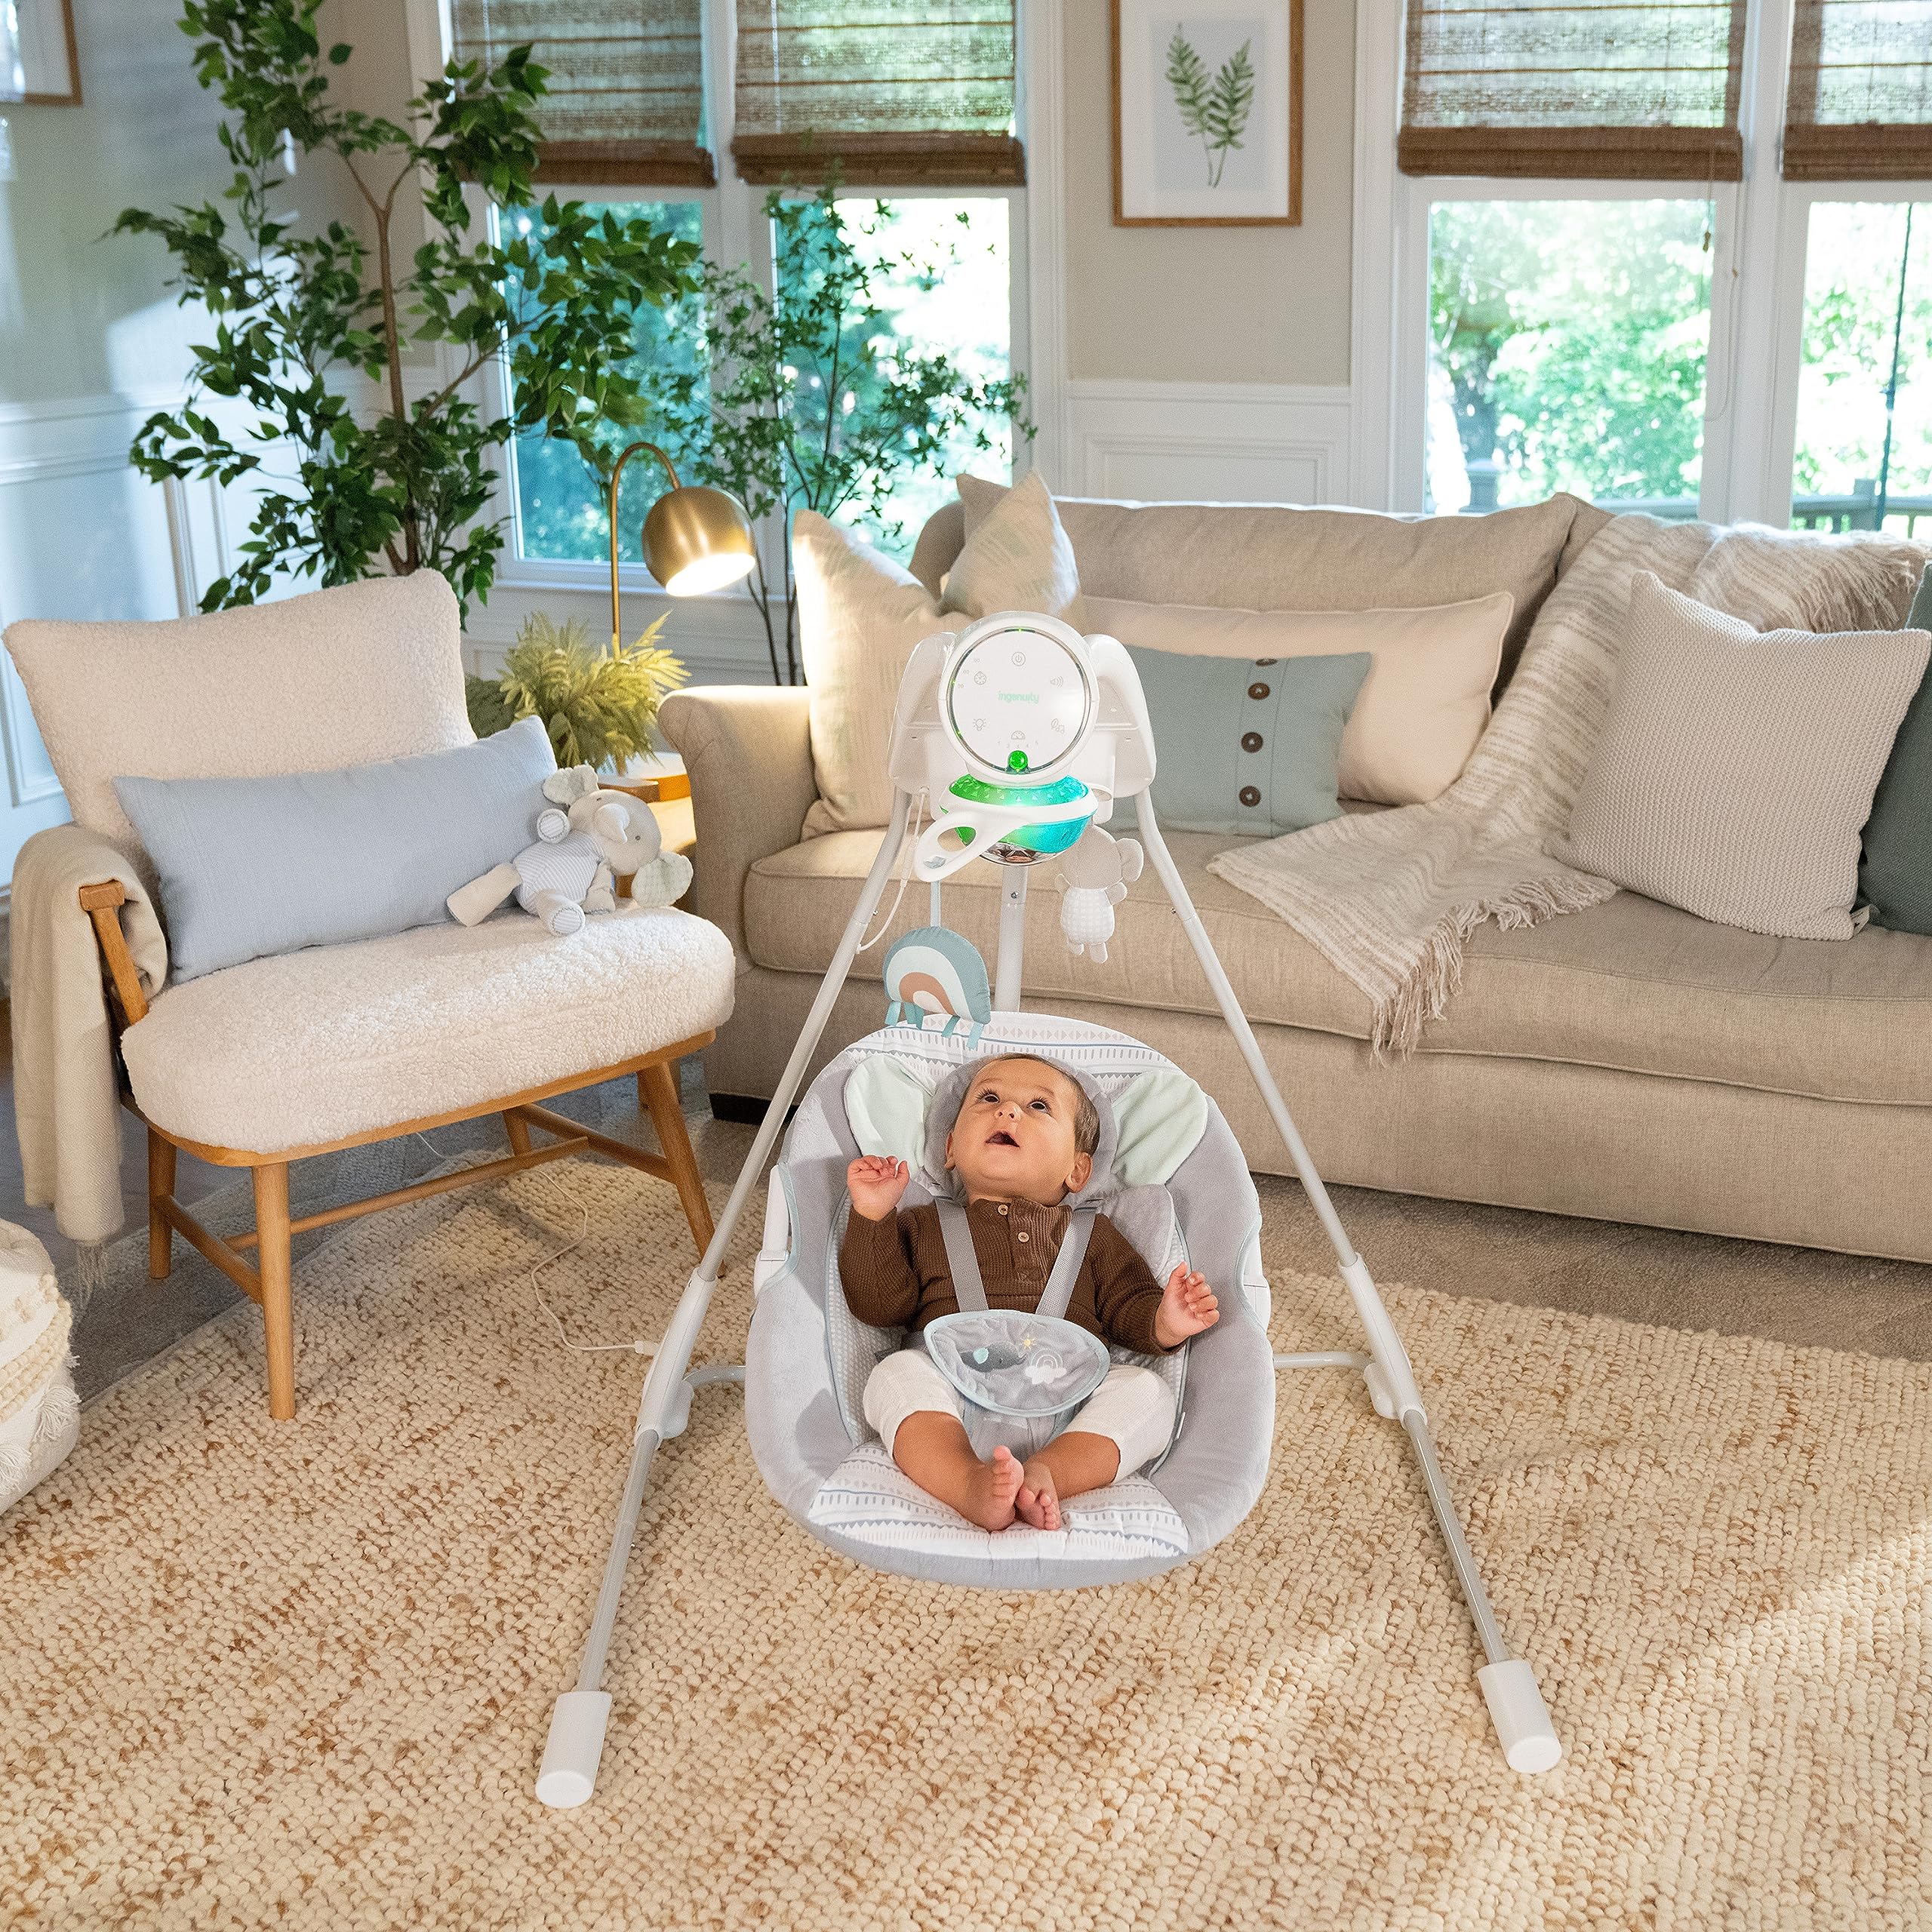 Ingenuity InLighten 5-Speed Baby Swing - Swivel Infant Seat, 5 Point Safety Harness, Nature Sounds, Lights - Van Elephant